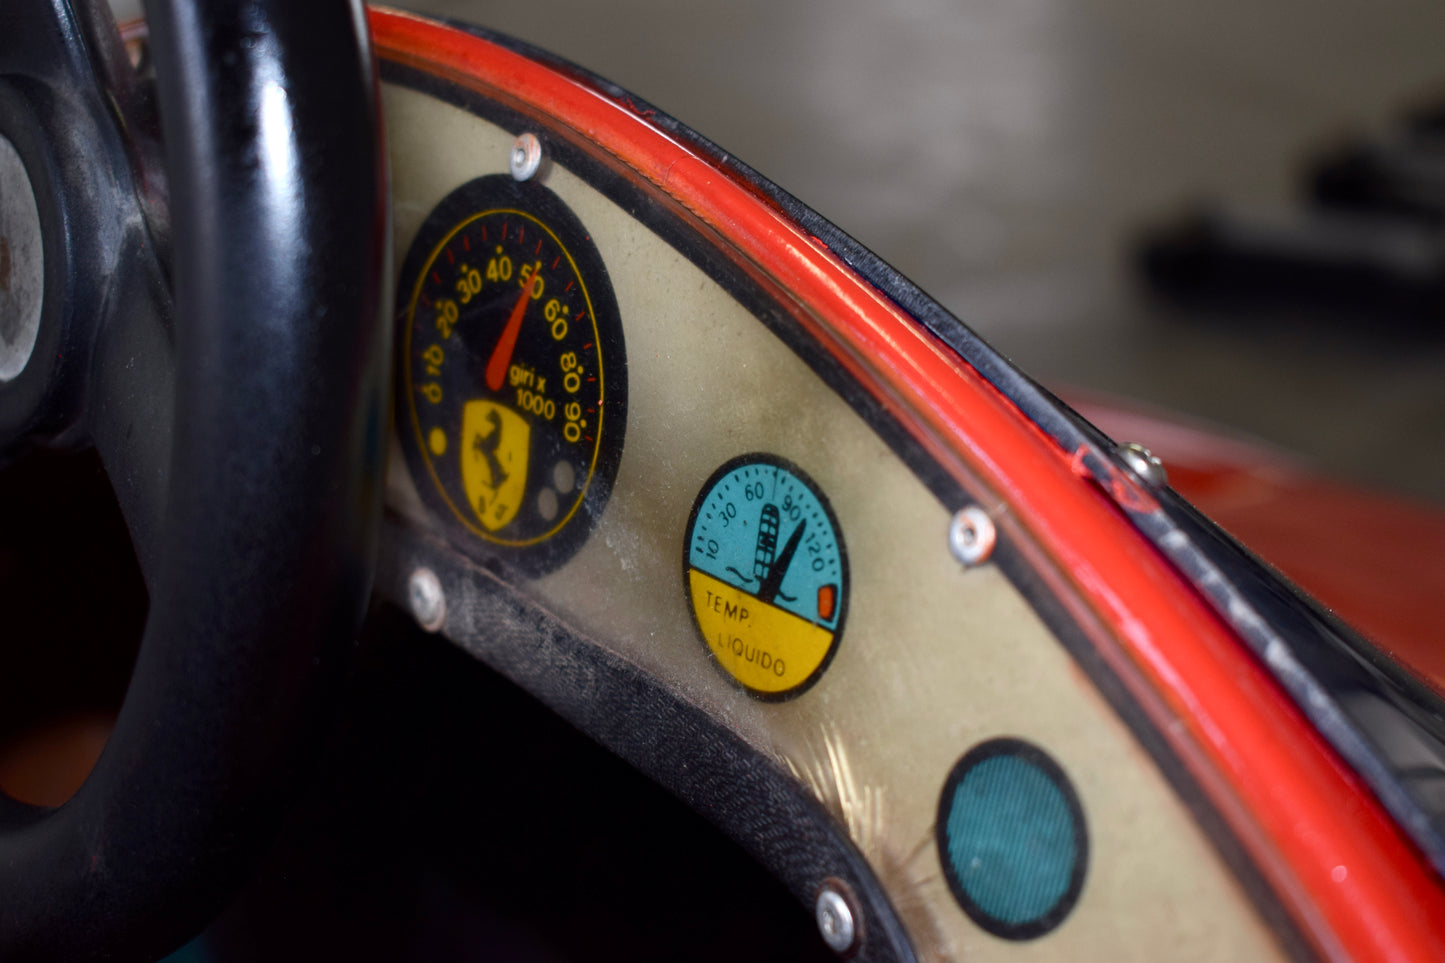 Ferrari F40-Style Coin-Operated Ride